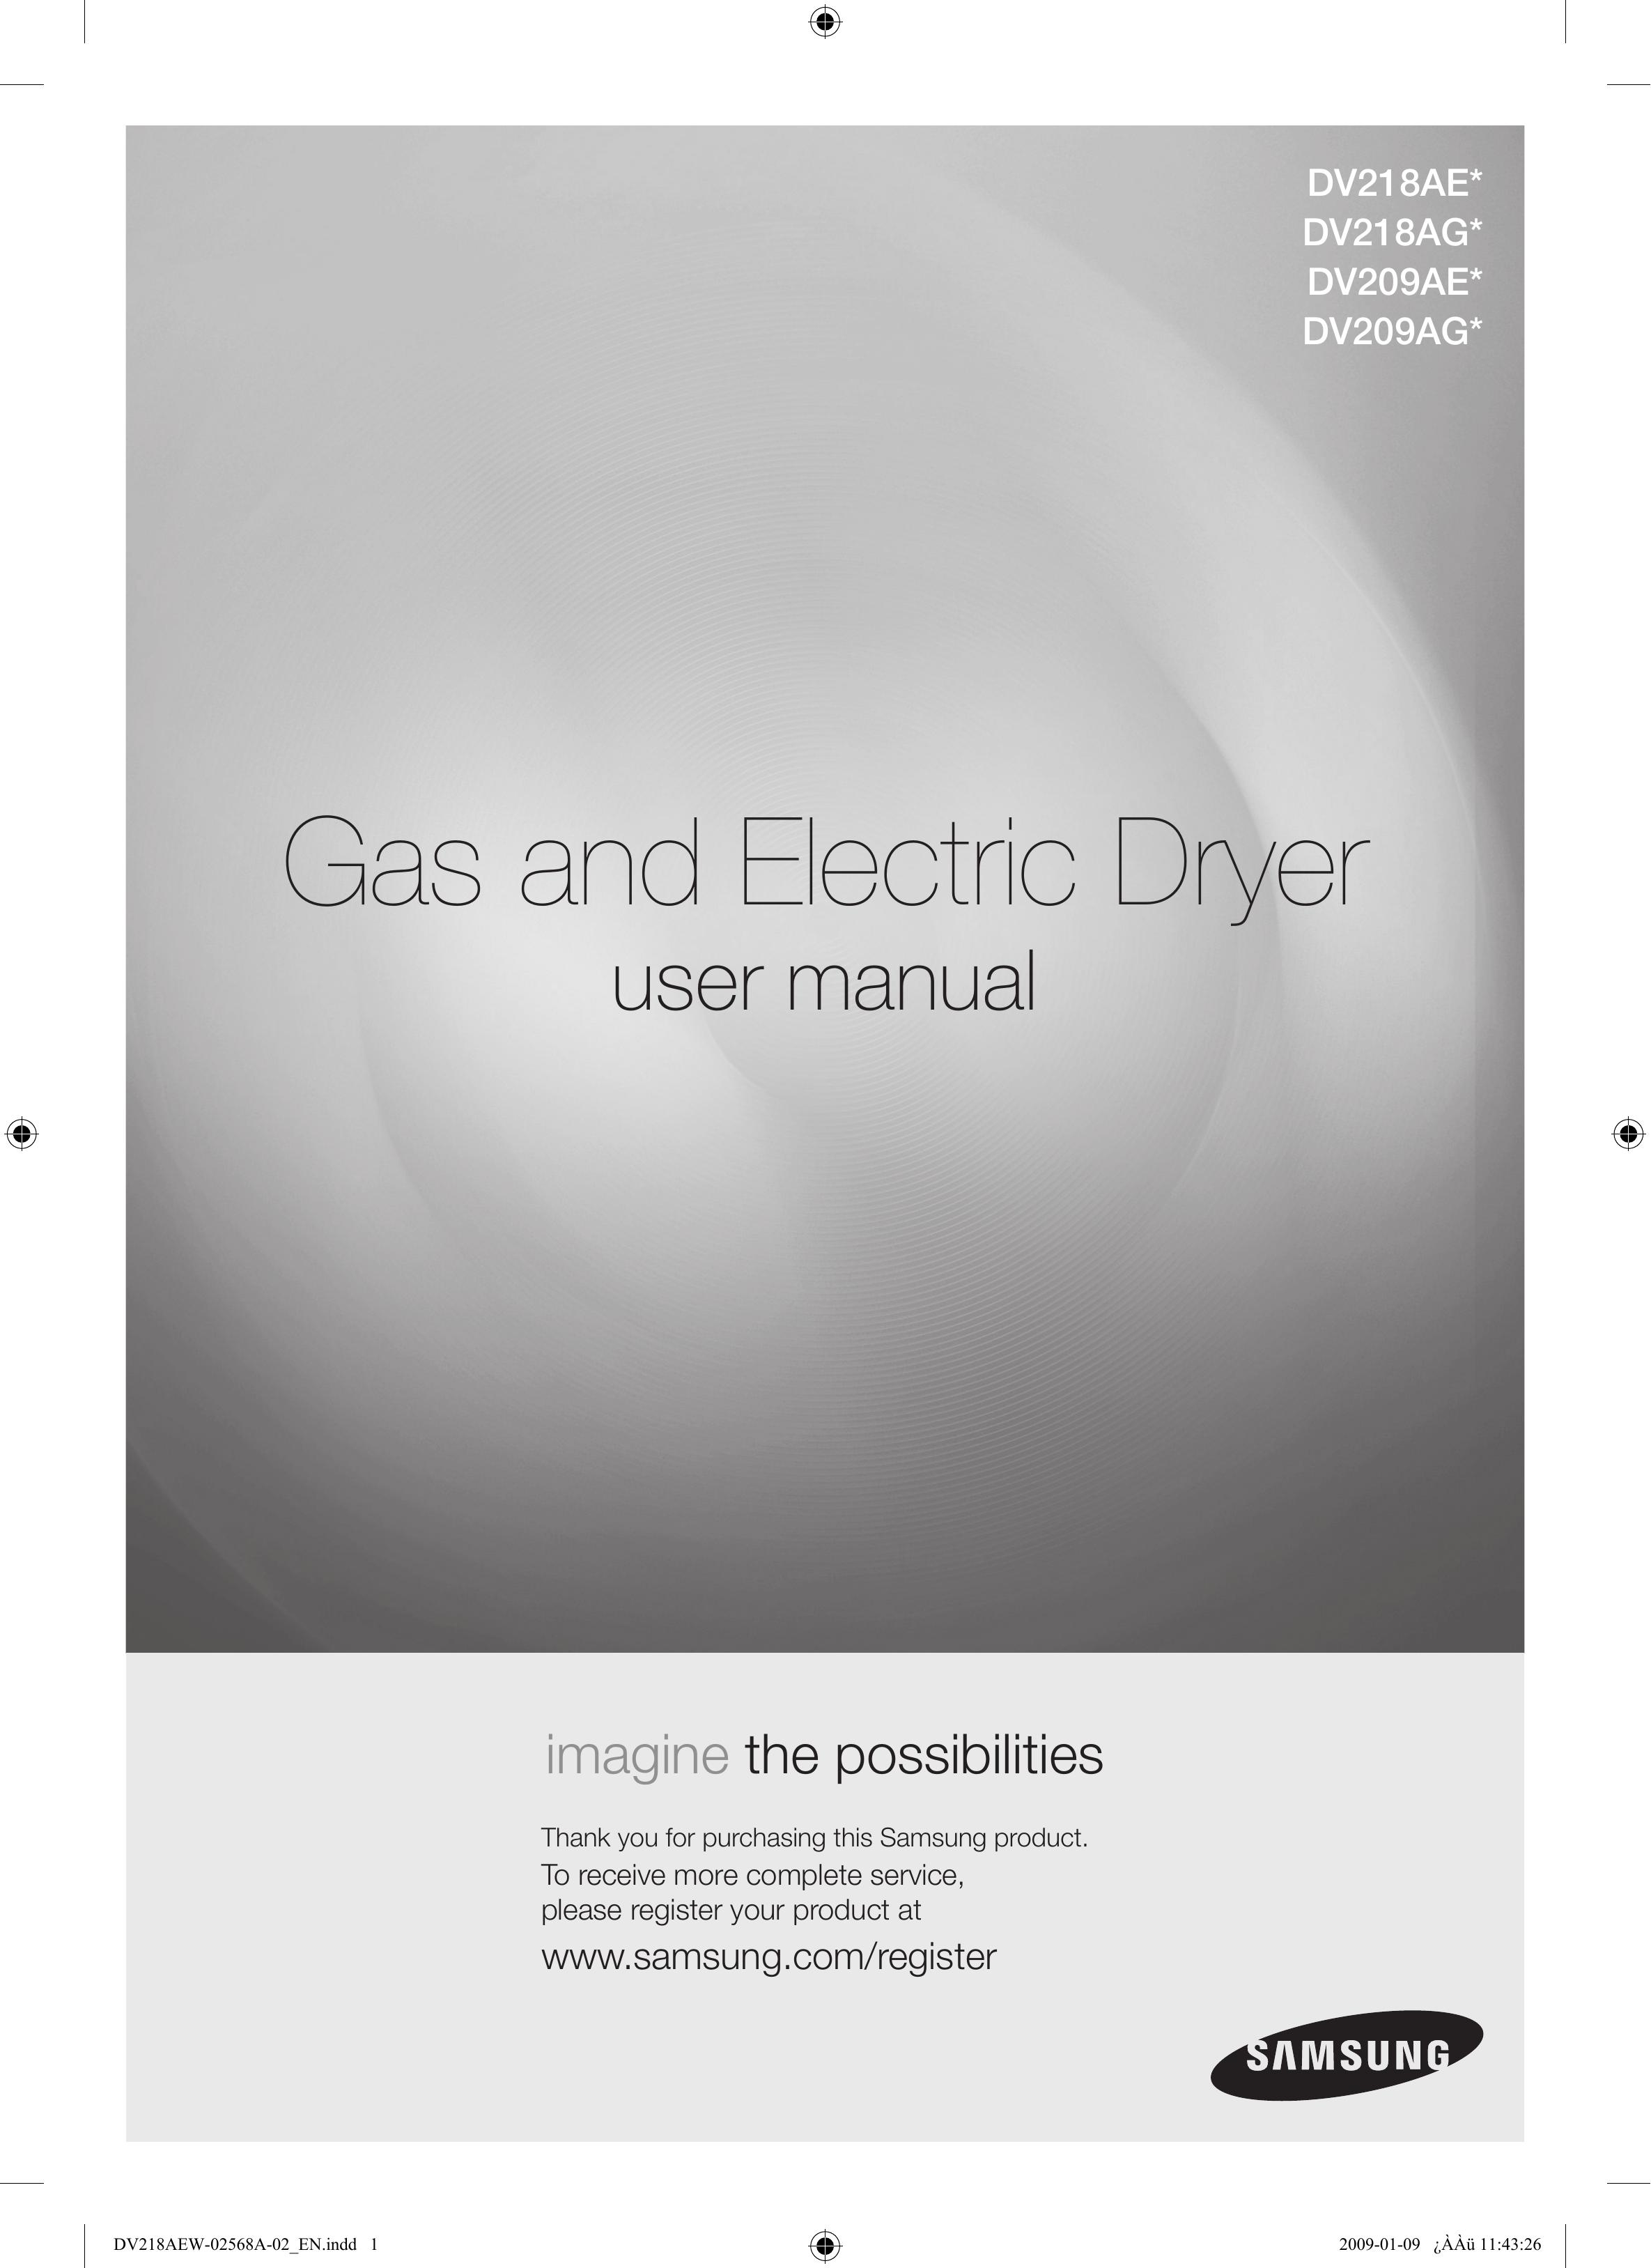 Samsung DV209AG Clothes Dryer User Manual